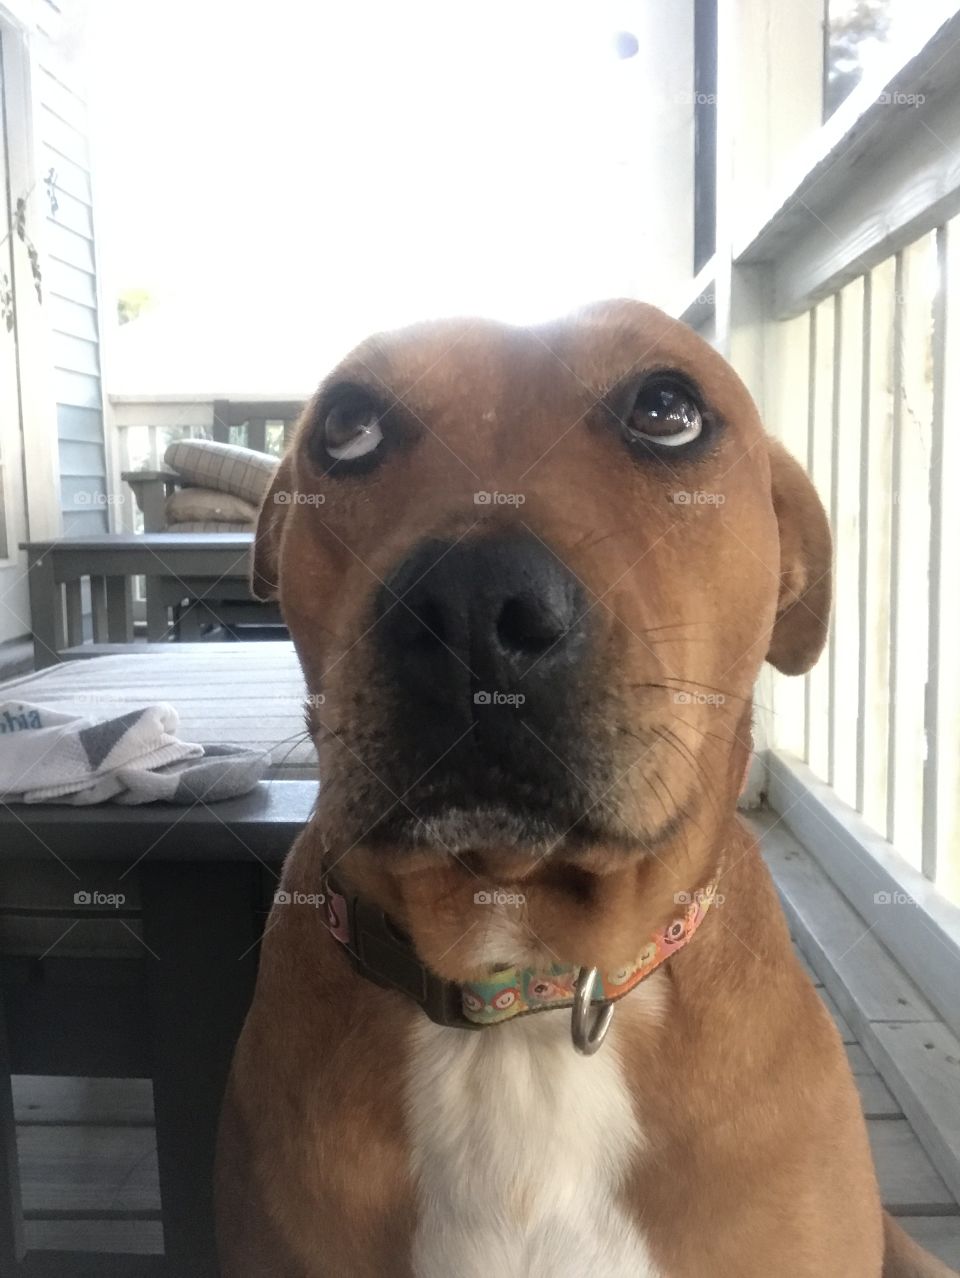 Guilty dog face